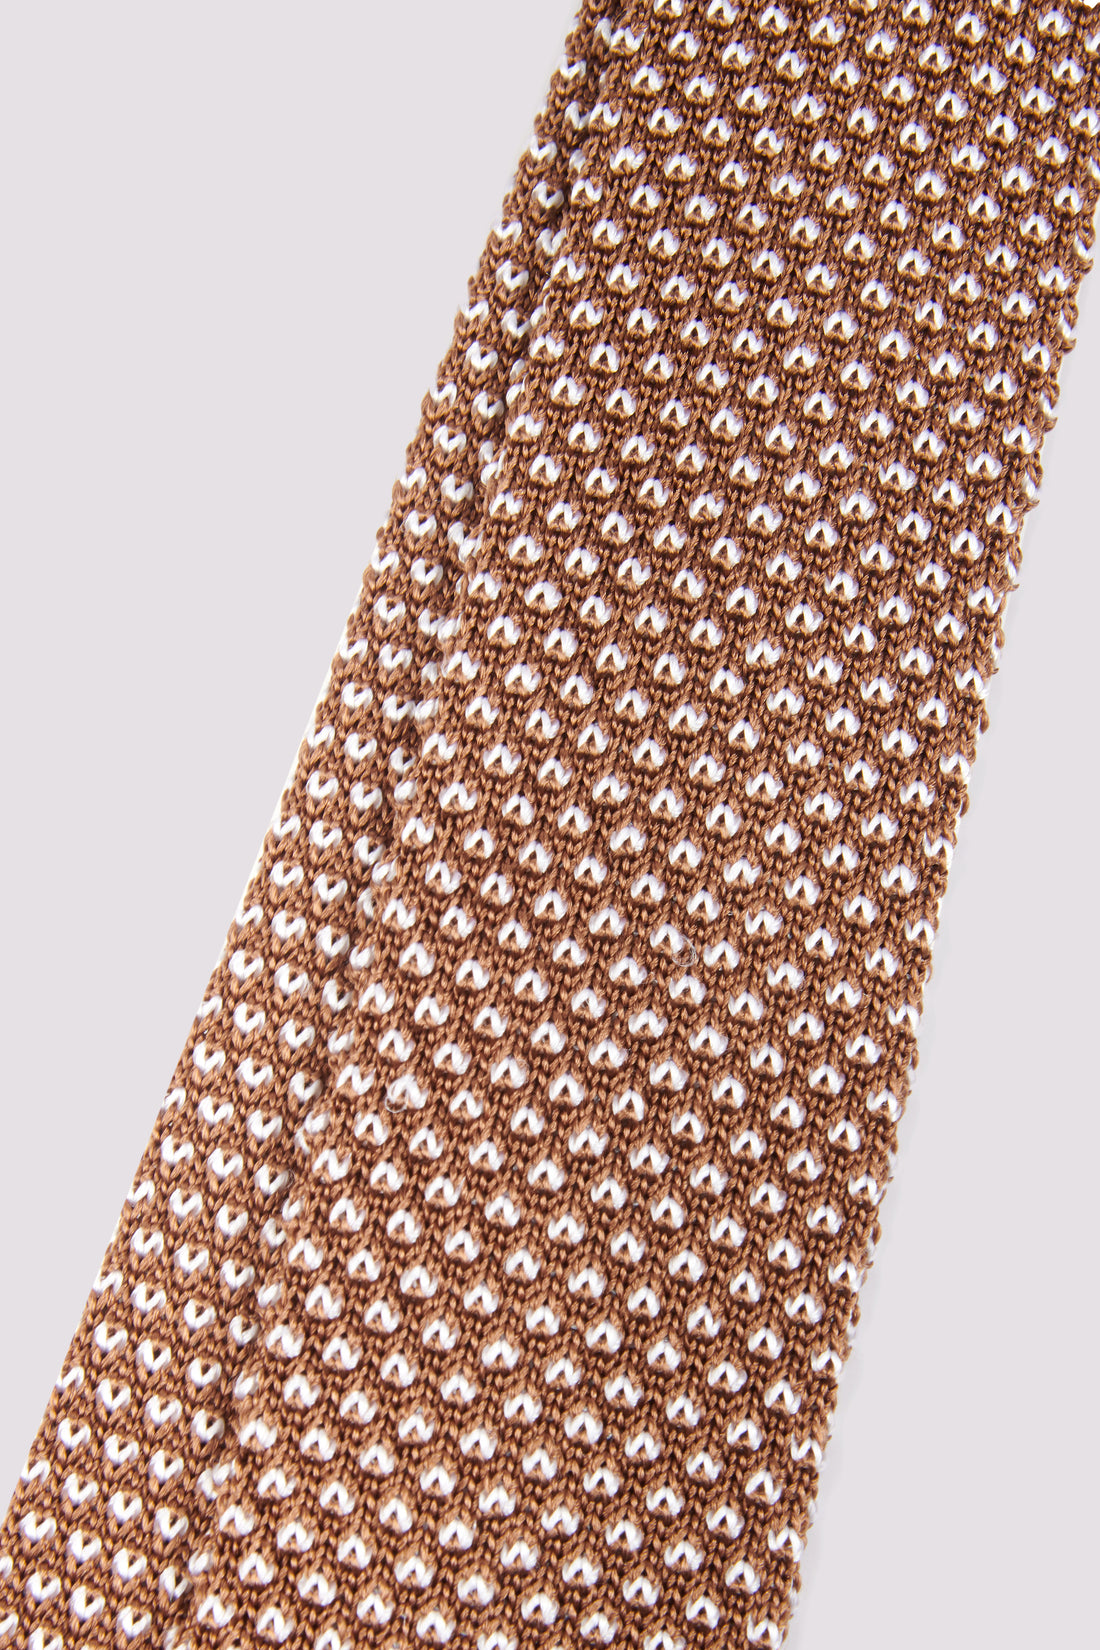 100% Silk Knitted Tie Light Brown